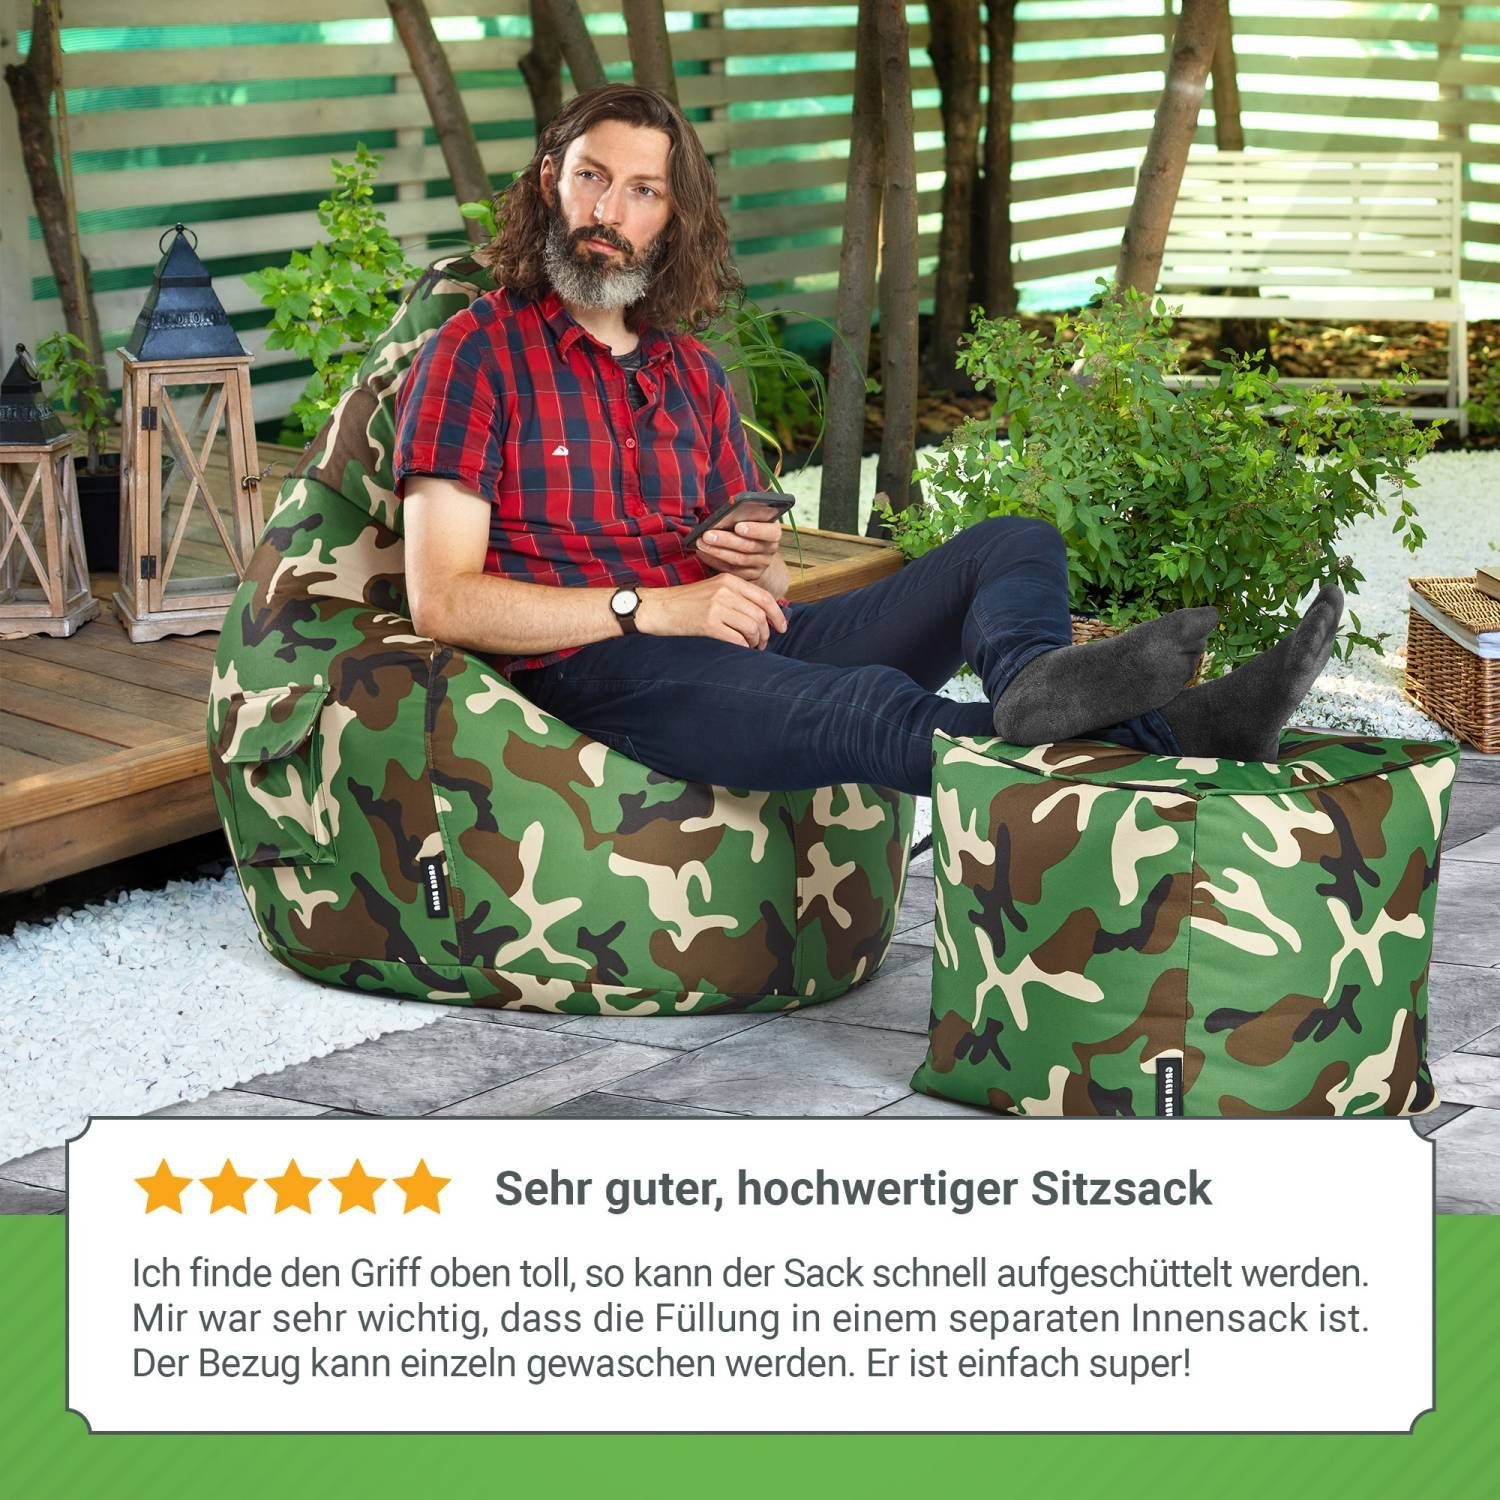 Green Bean Sitzsack Cozy Bag Gaming Lounge Gamer Chair 80x70x90cm Camouflage Weich Sitzhocker Gamingstuhl Bodenkissen mit Waschbar), 230L Füllung, Bean Grün Kuschelig Relax-Sessel Rückenlehne mit (Sitzsack 